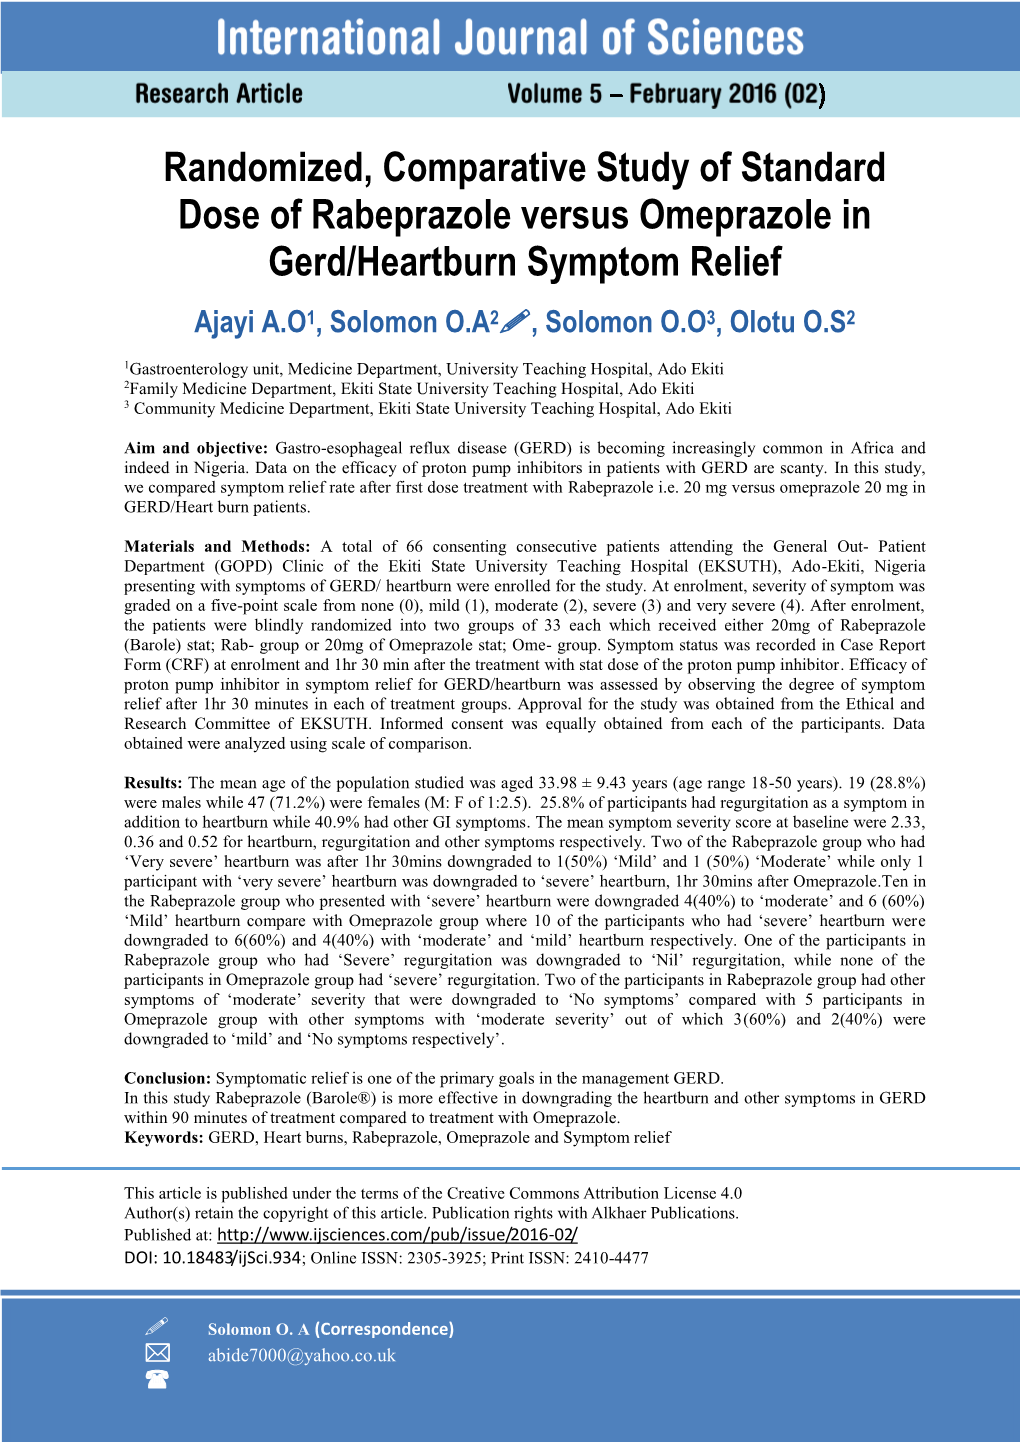 Randomized, Comparative Study of Standard Dose of Rabeprazole Versus Omeprazole in Gerd/Heartburn Symptom Relief